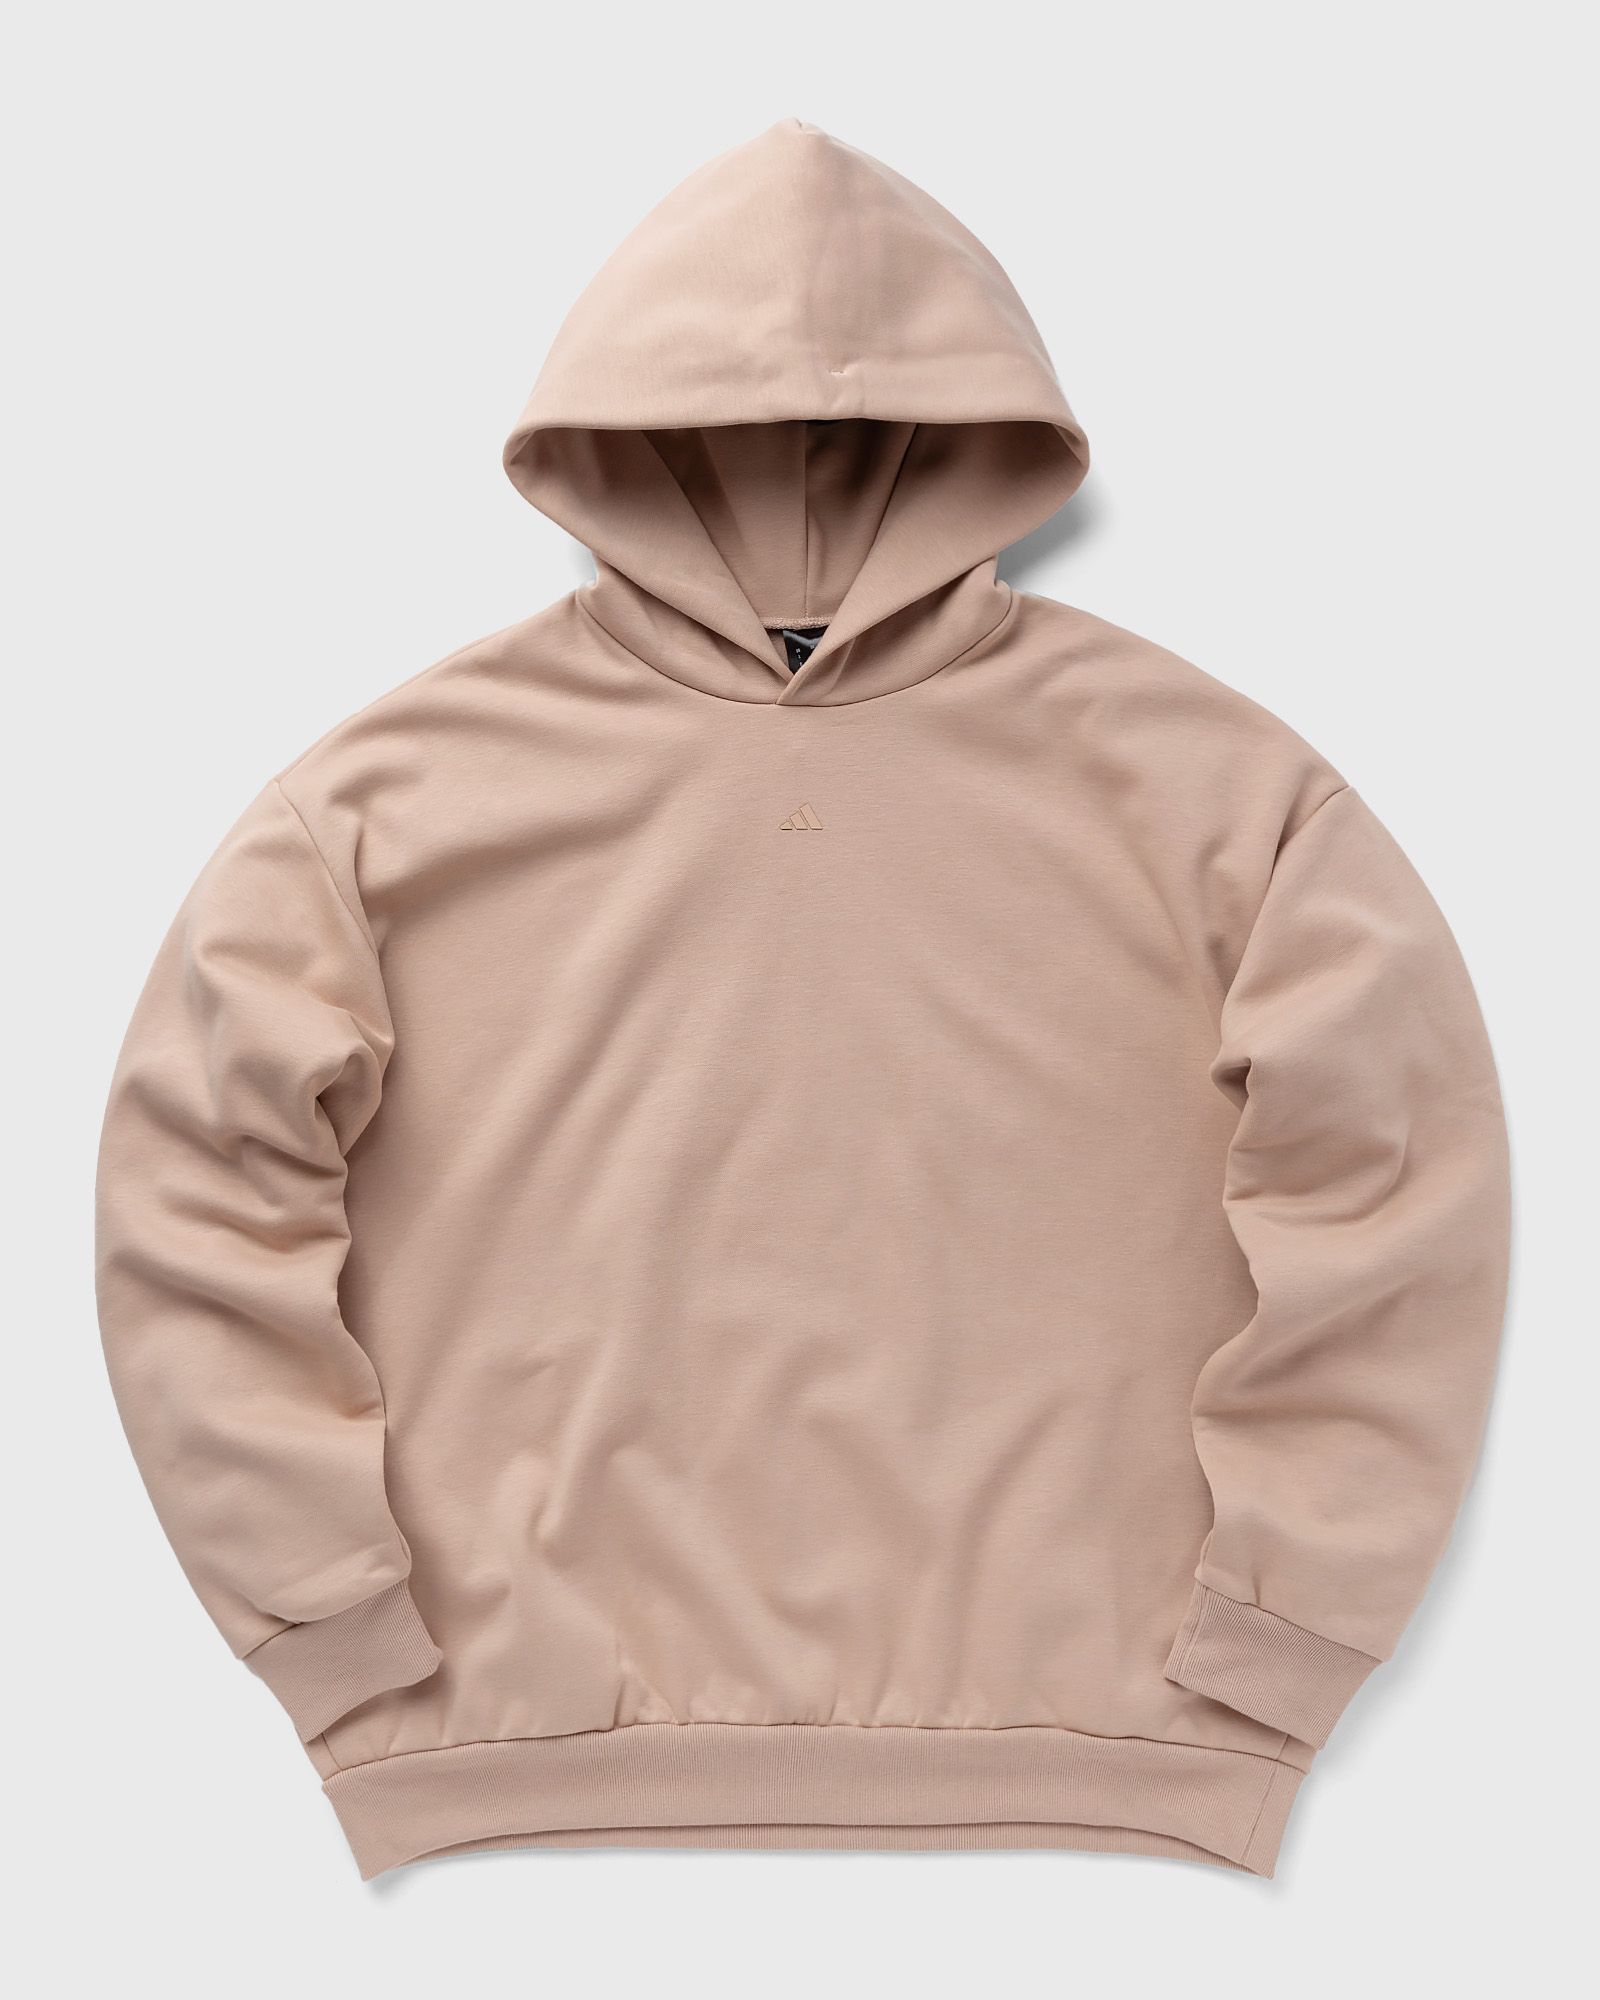 Adidas - basketball fleece hoody men hoodies beige in größe:xl